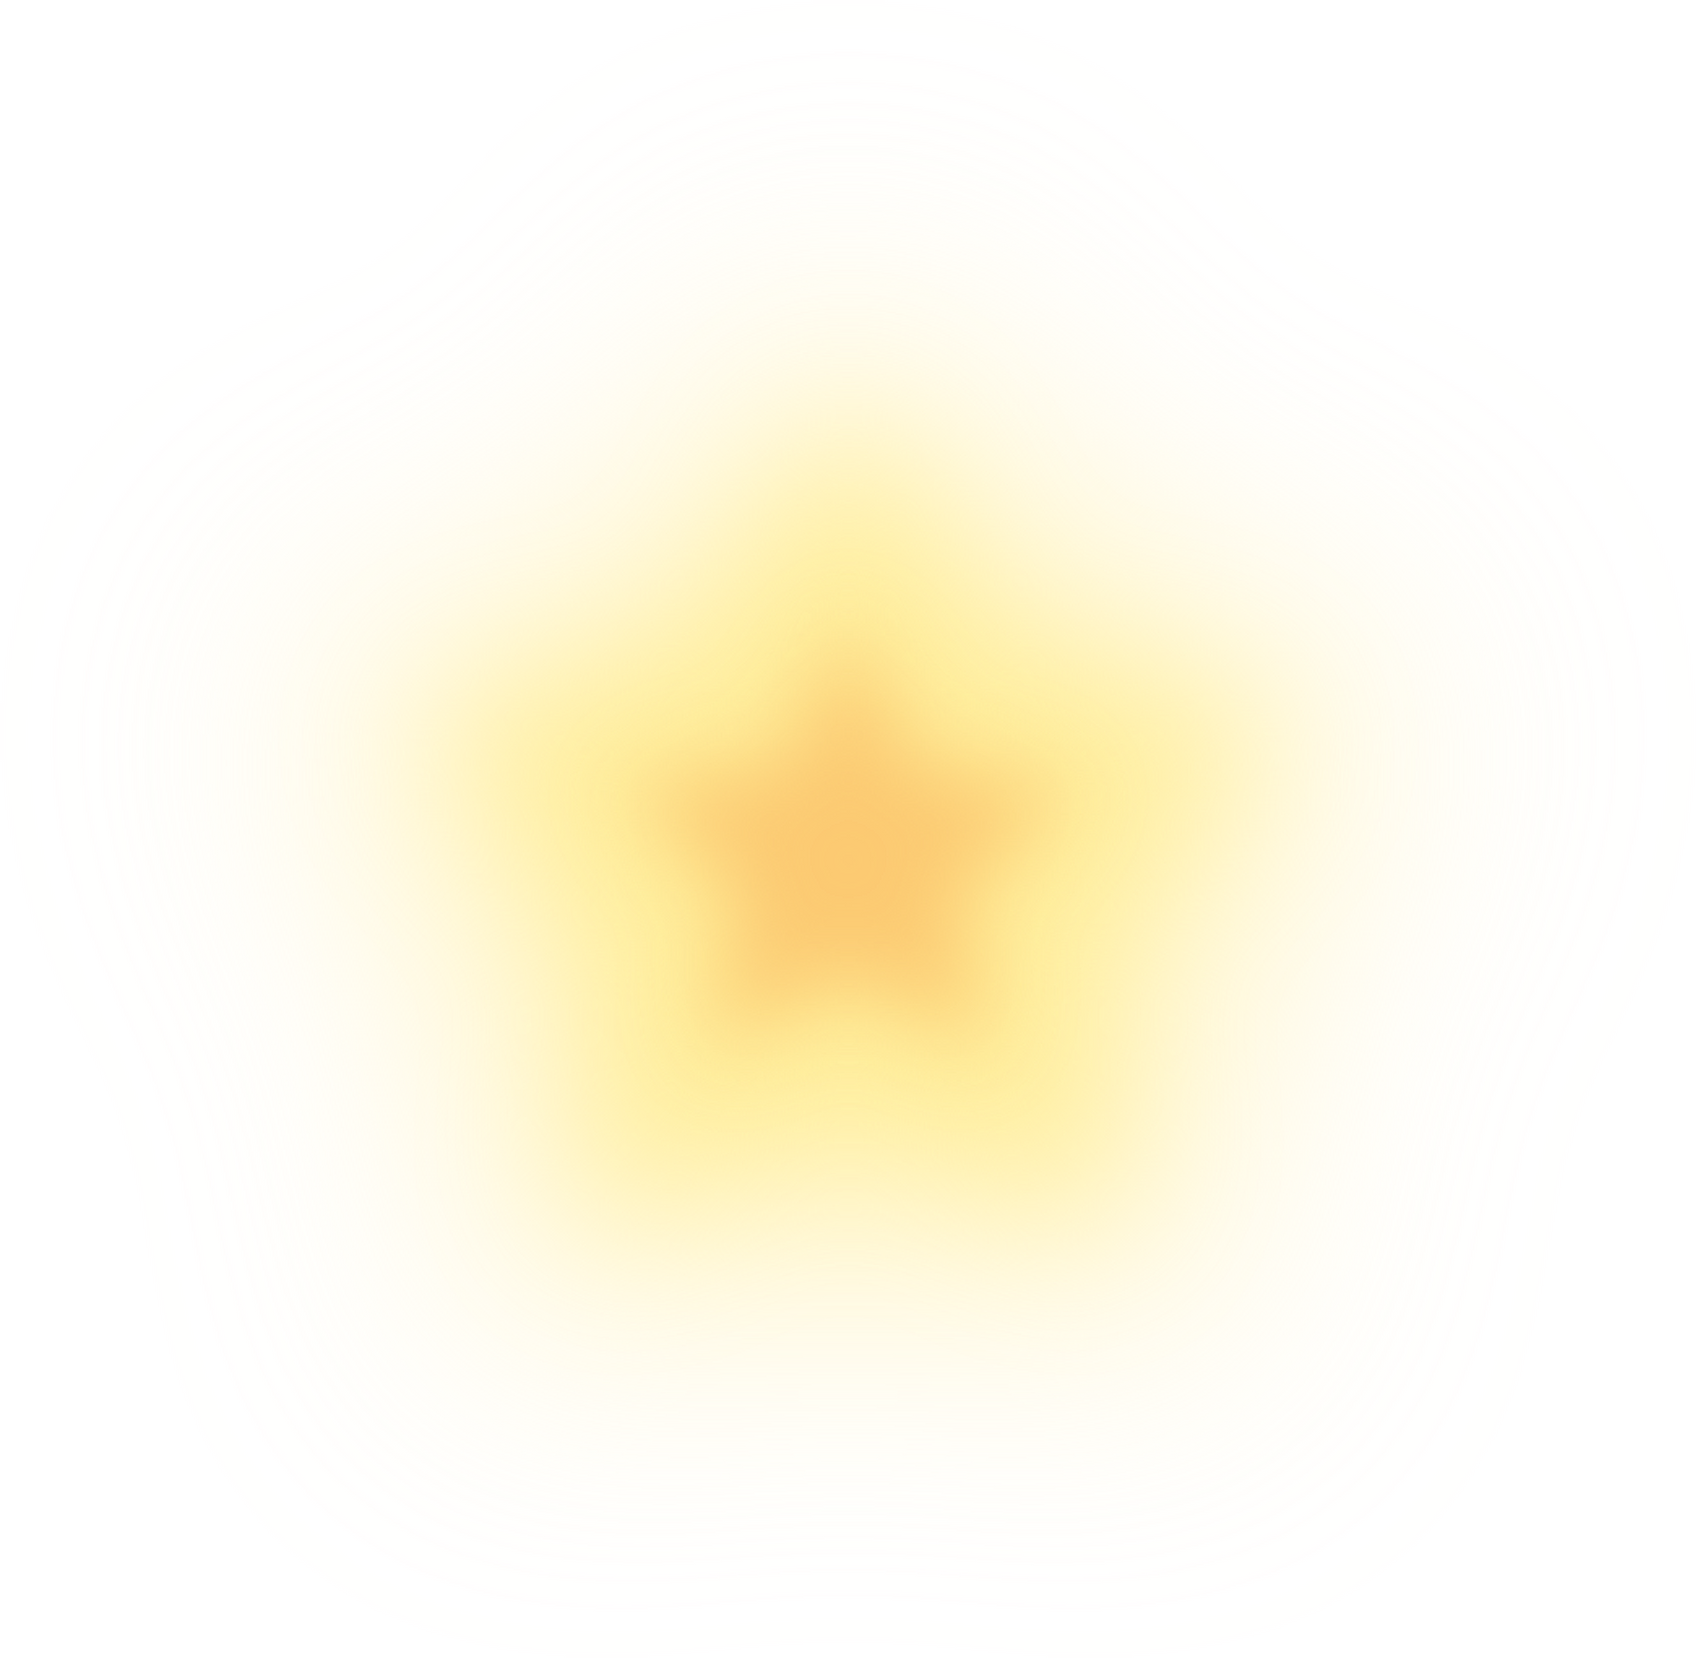 Star shaped Aura element